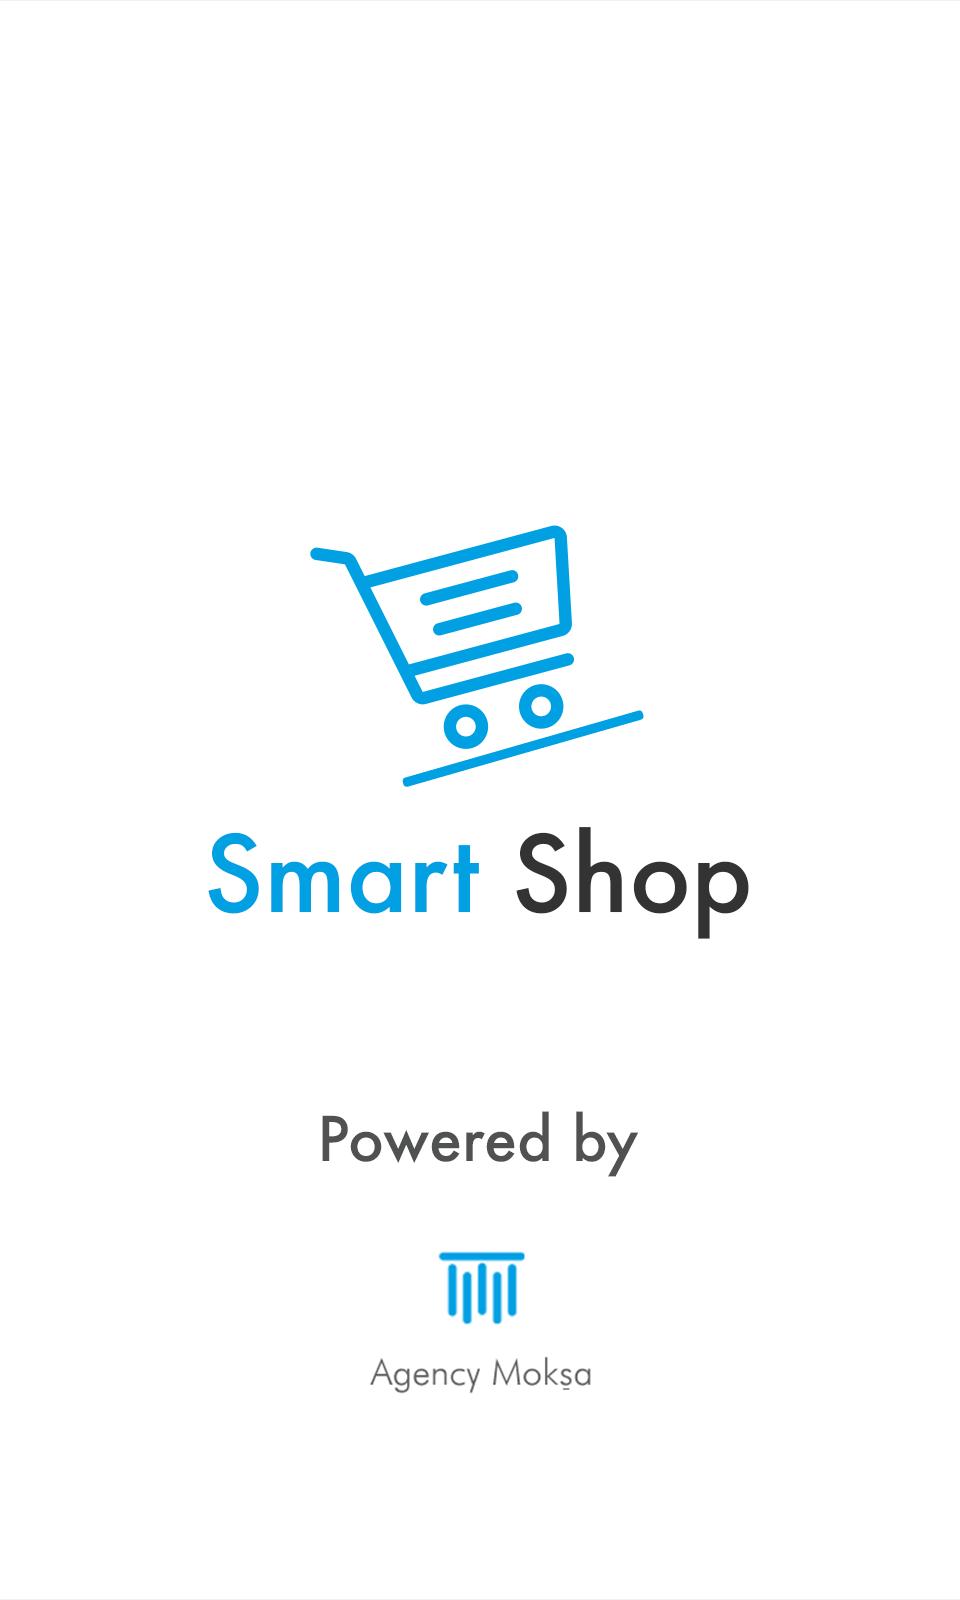 Smart shop ru. Smart shopping. Smart shop mobile. Smart shop. Smart shop mobile logo.